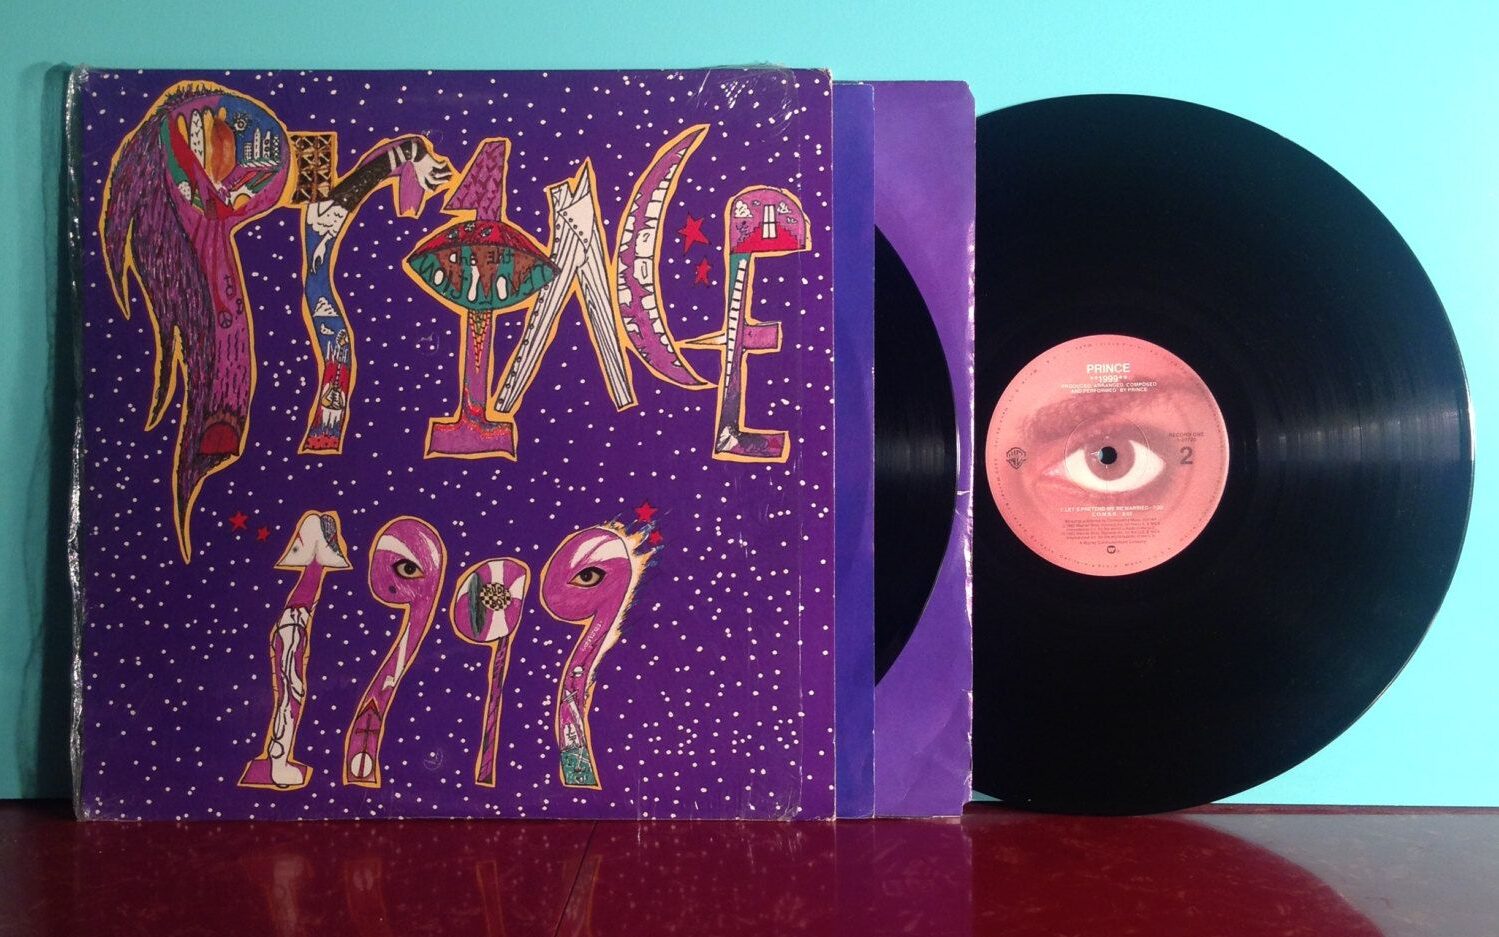 Prince Vinyl for his album "1999"